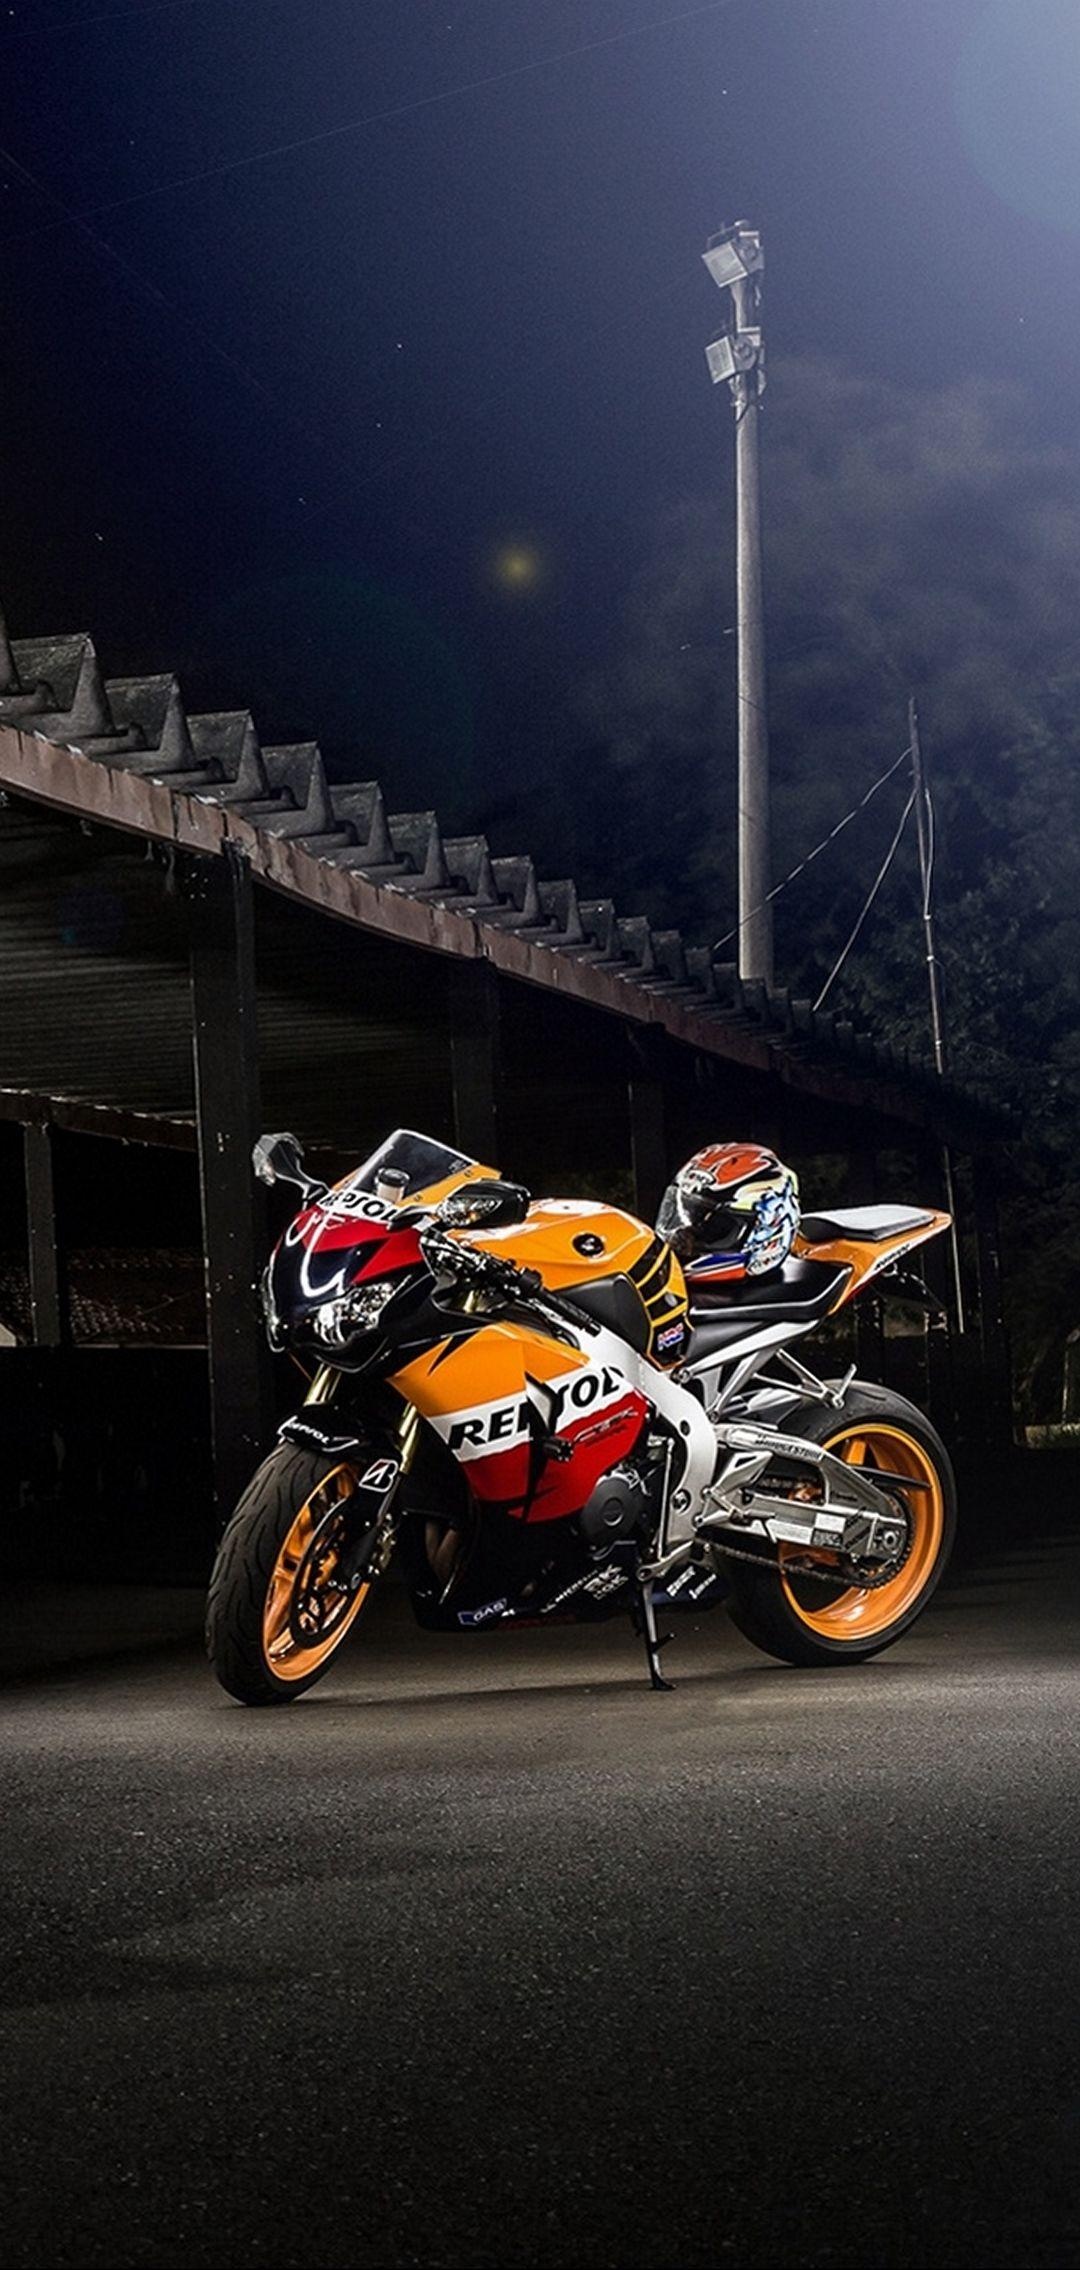 Honda Repsol, Iconic motorcycle, Stylish wallpapers, Racing inspiration, 1080x2270 HD Handy